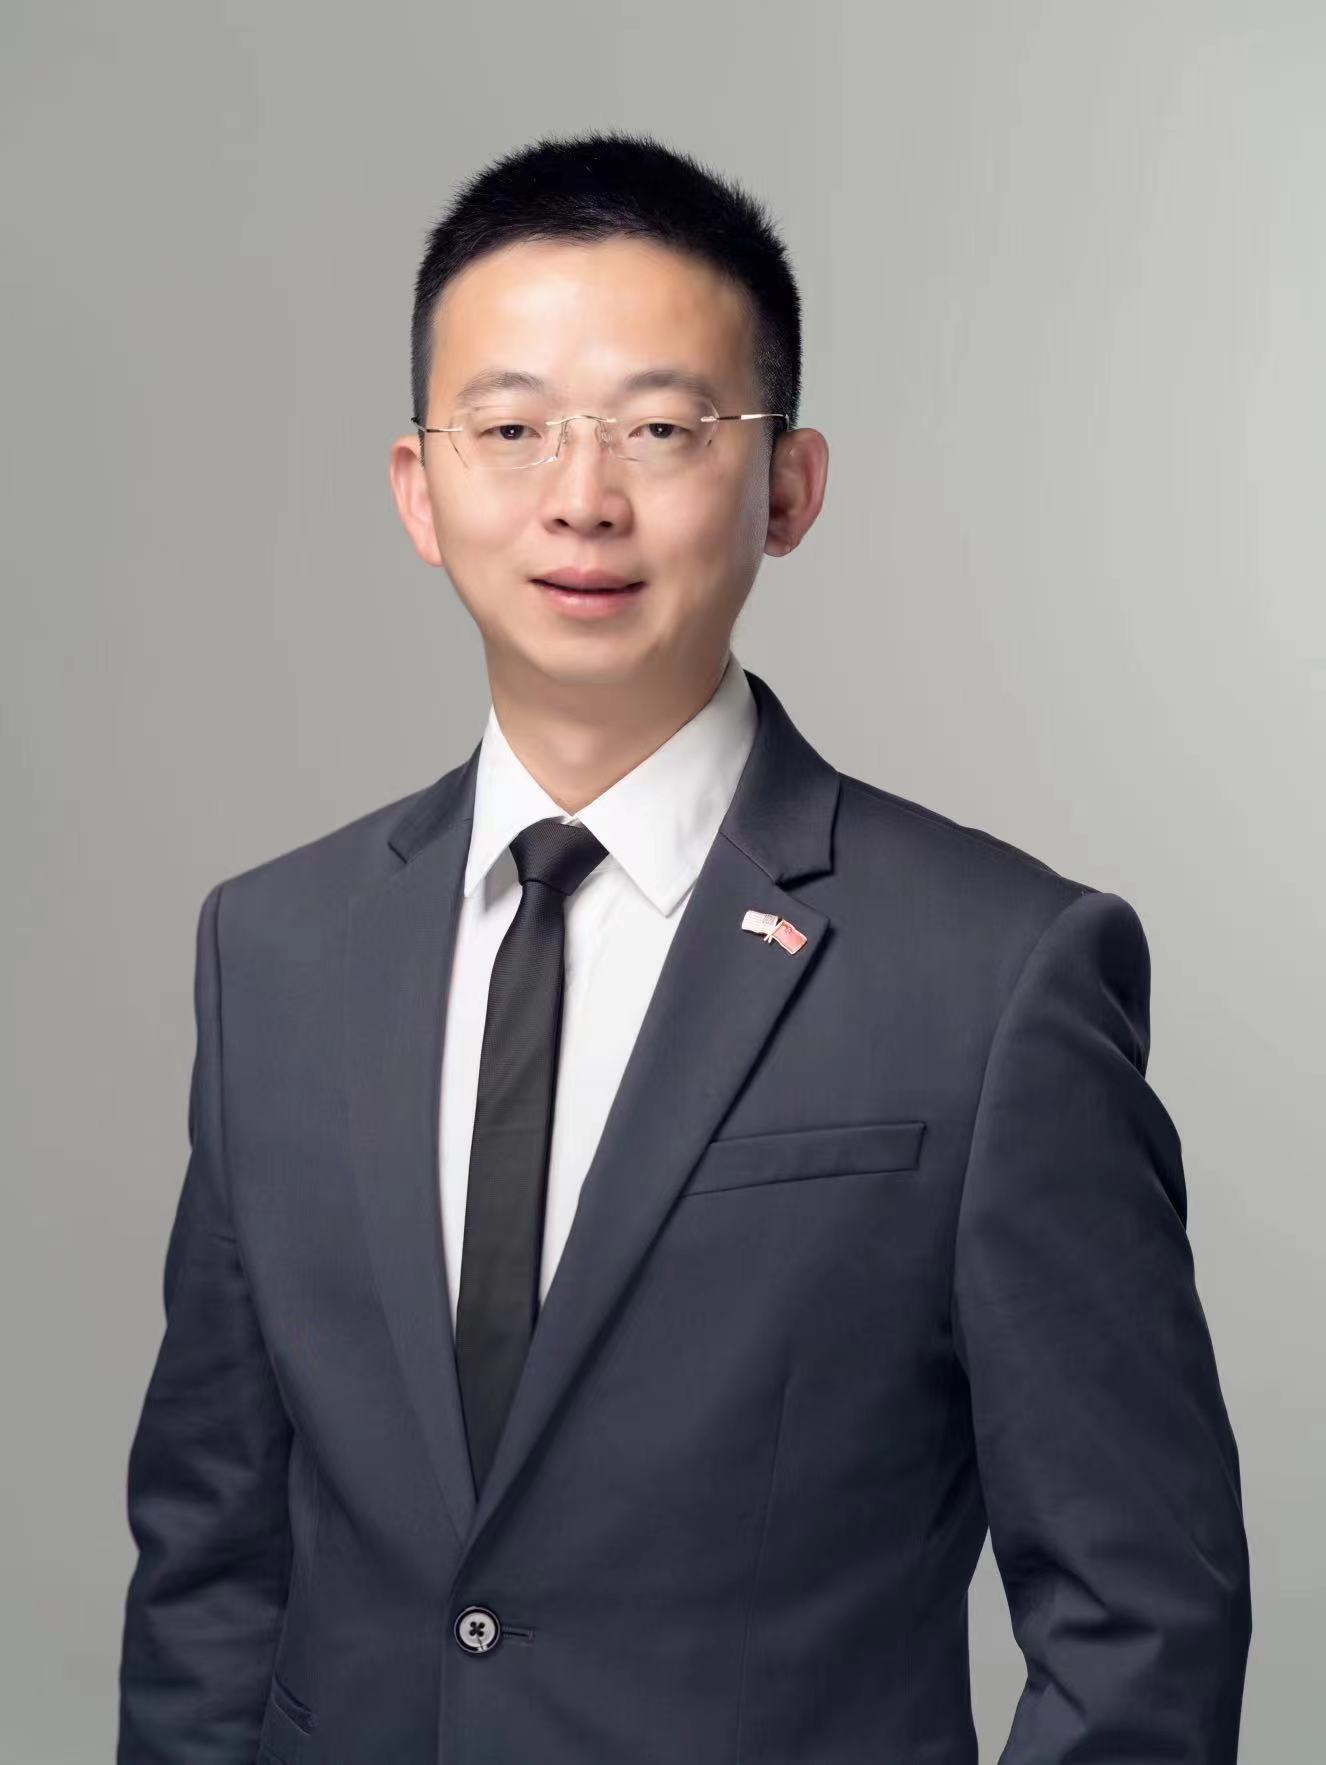 Dr. Xiang Lingyun Joins NUM as Tenured Economics Professor and PhD Advisor